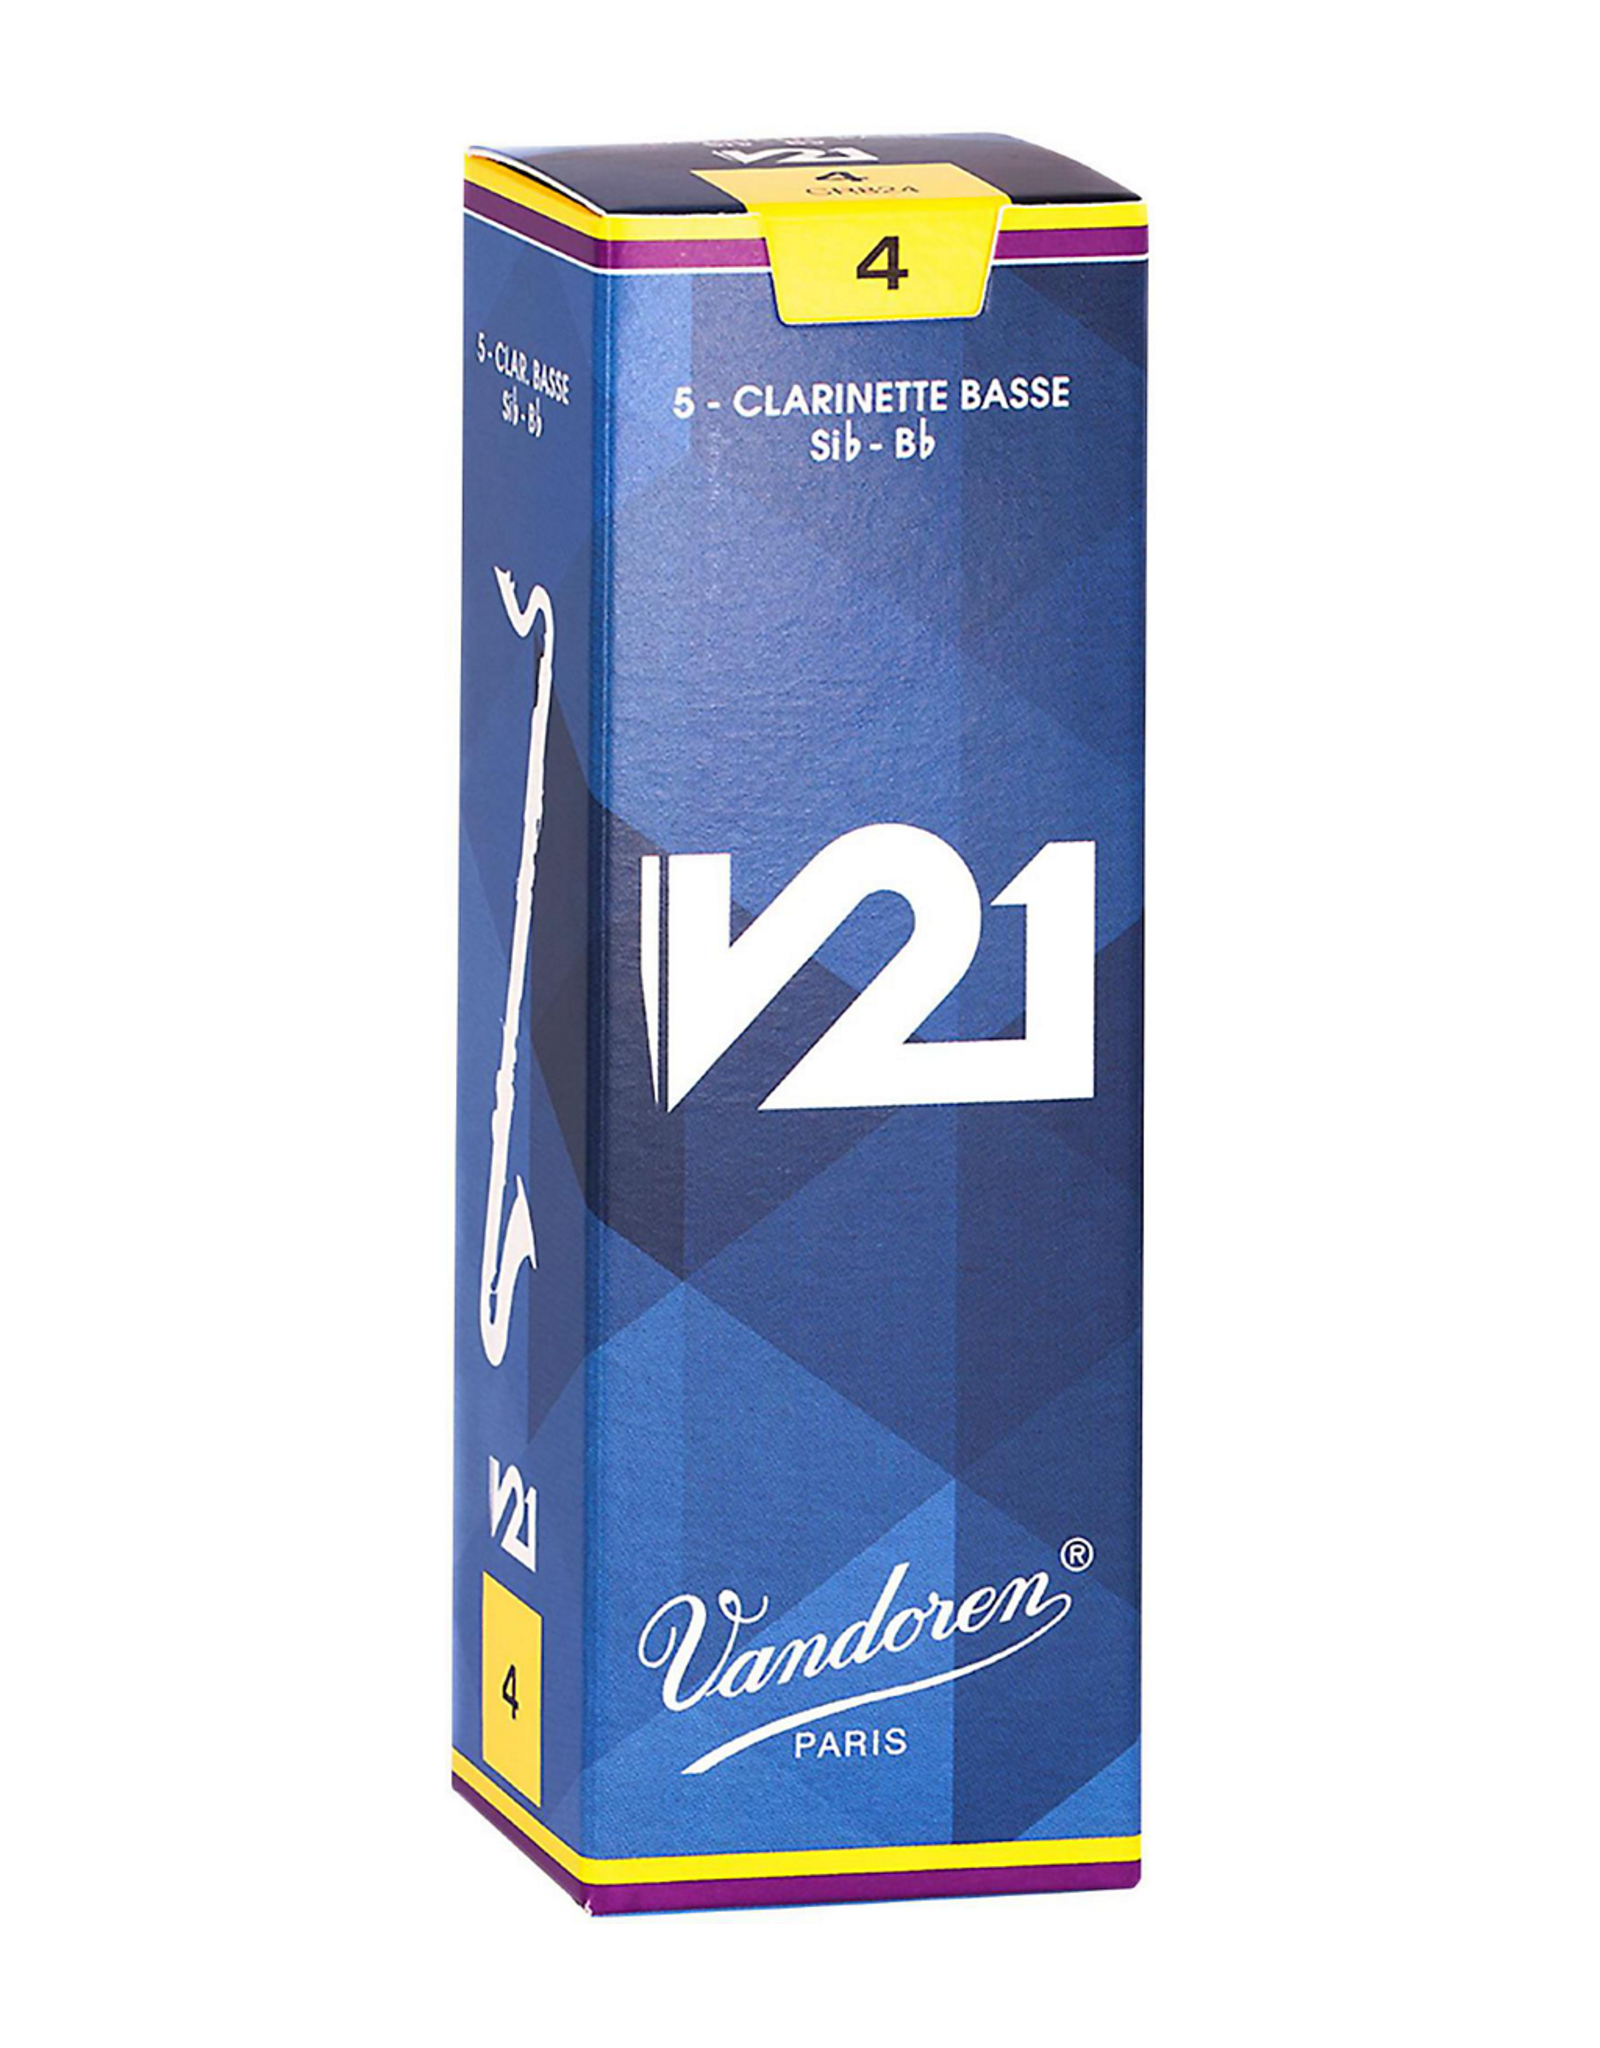 Vandoren Vandoren V21 Bass Clarinet Reed Box of 5;